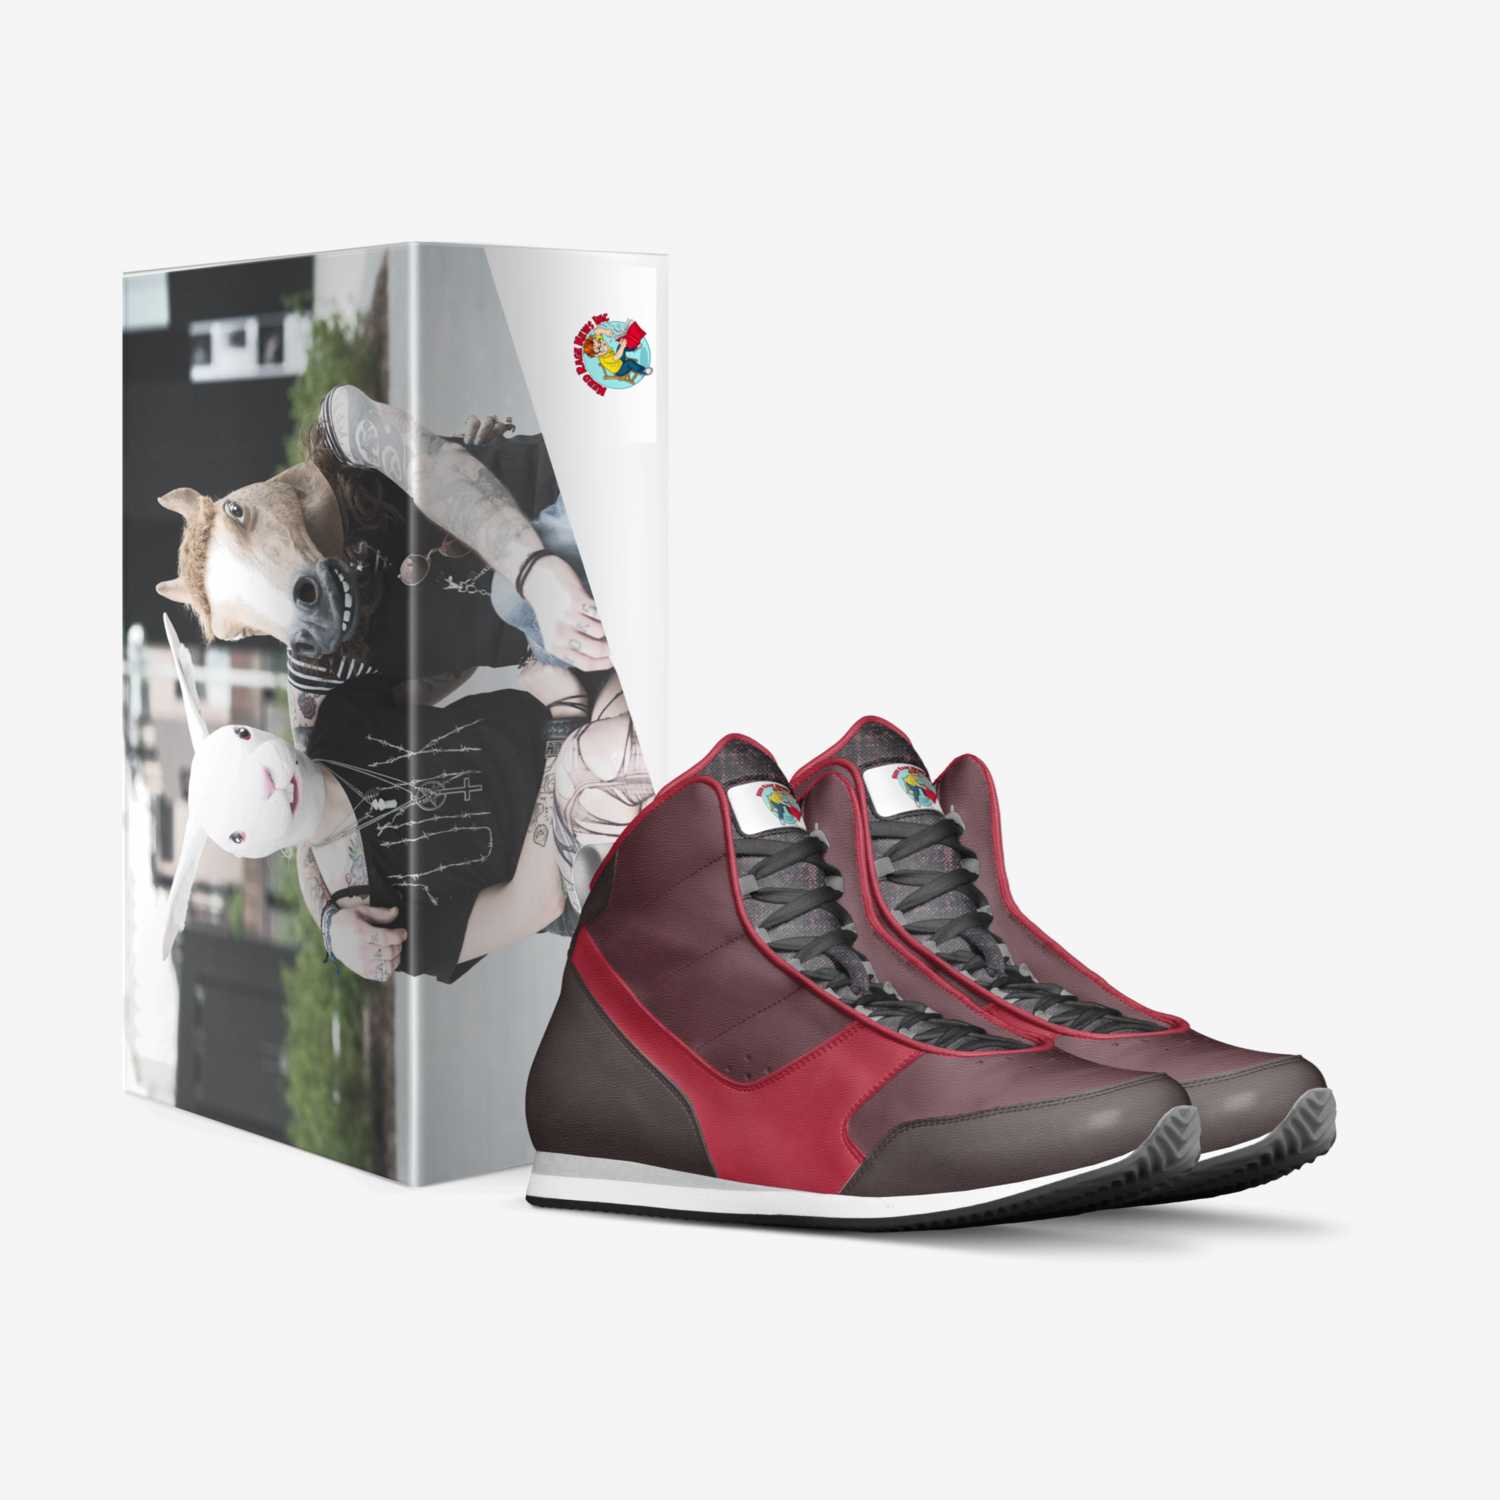 Nerd Awakening custom made in Italy shoes by Steve Wollett | Box view